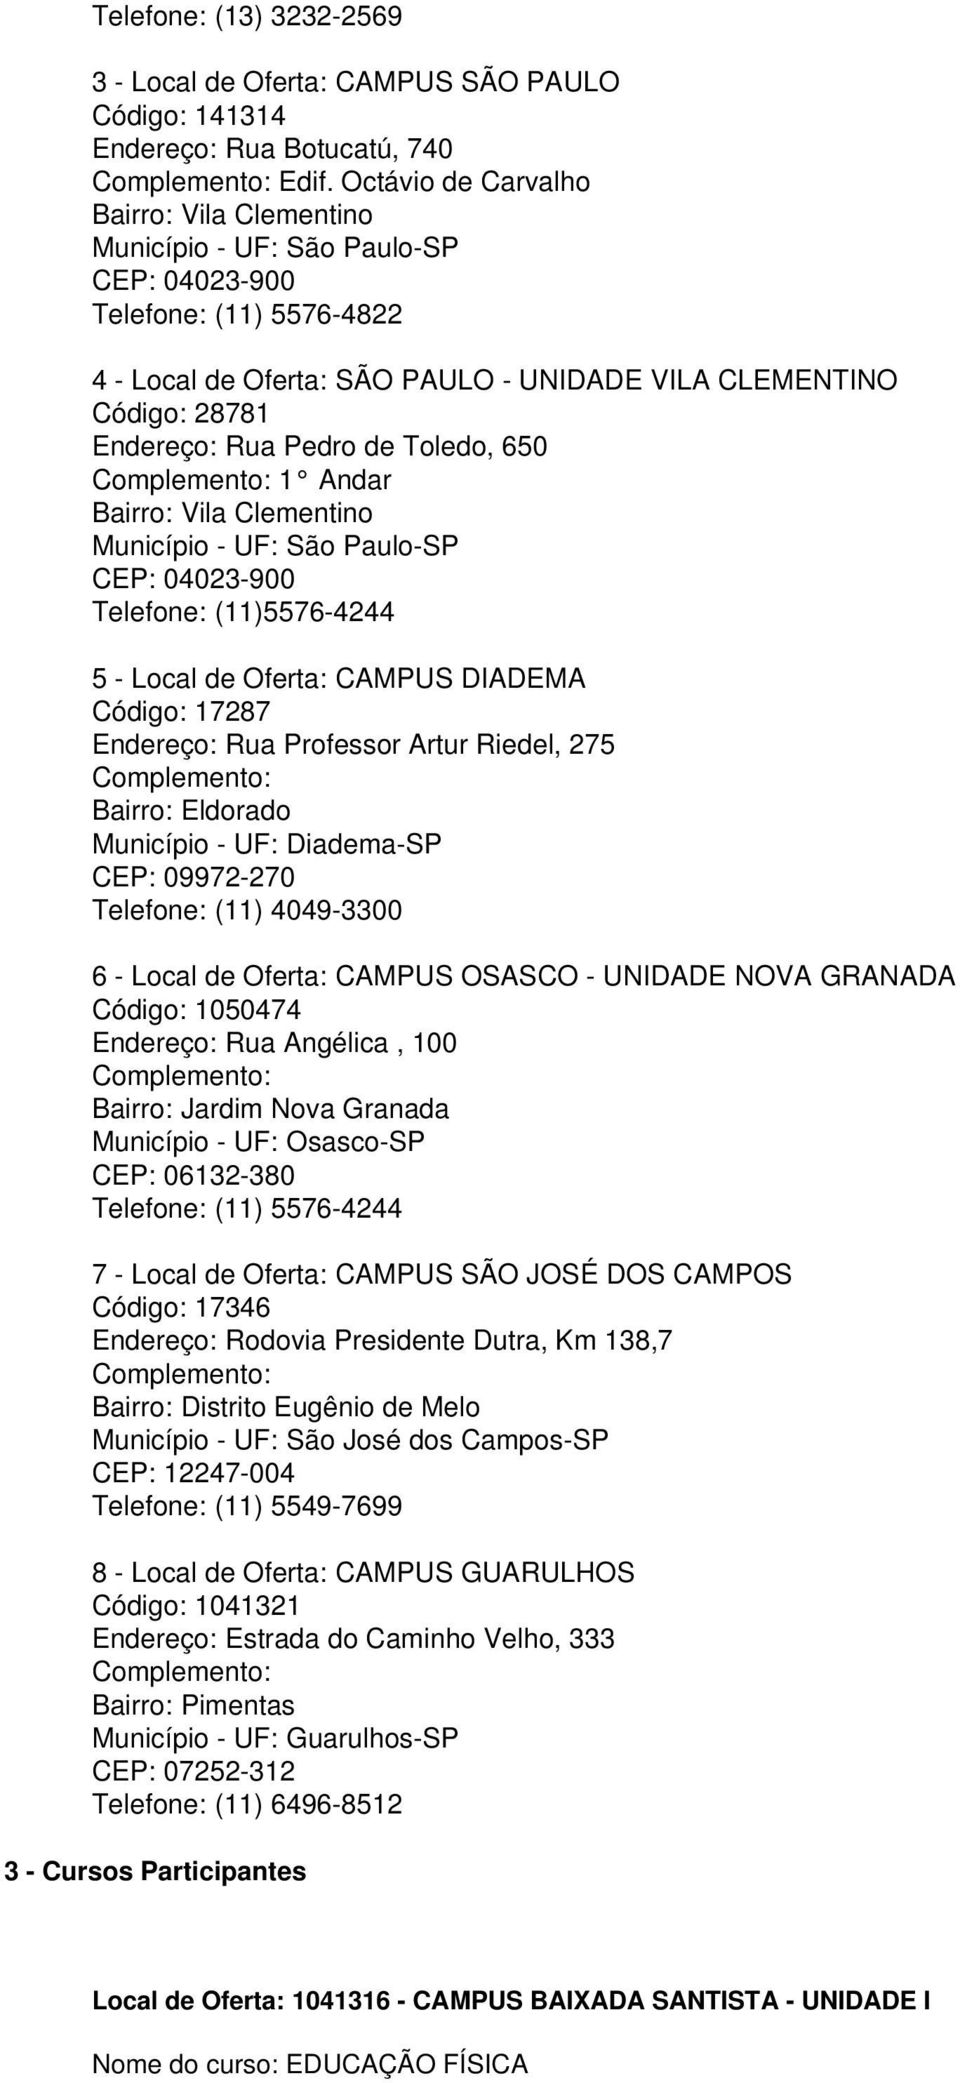 Pedro de Toledo, 650 Complemento: 1 Andar Bairro: Vila Clementino Município - UF: São Paulo-SP CEP: 04023-900 Telefone: (11)5576-4244 5 - Local de Oferta: CAMPUS DIADEMA Código: 17287 Endereço: Rua